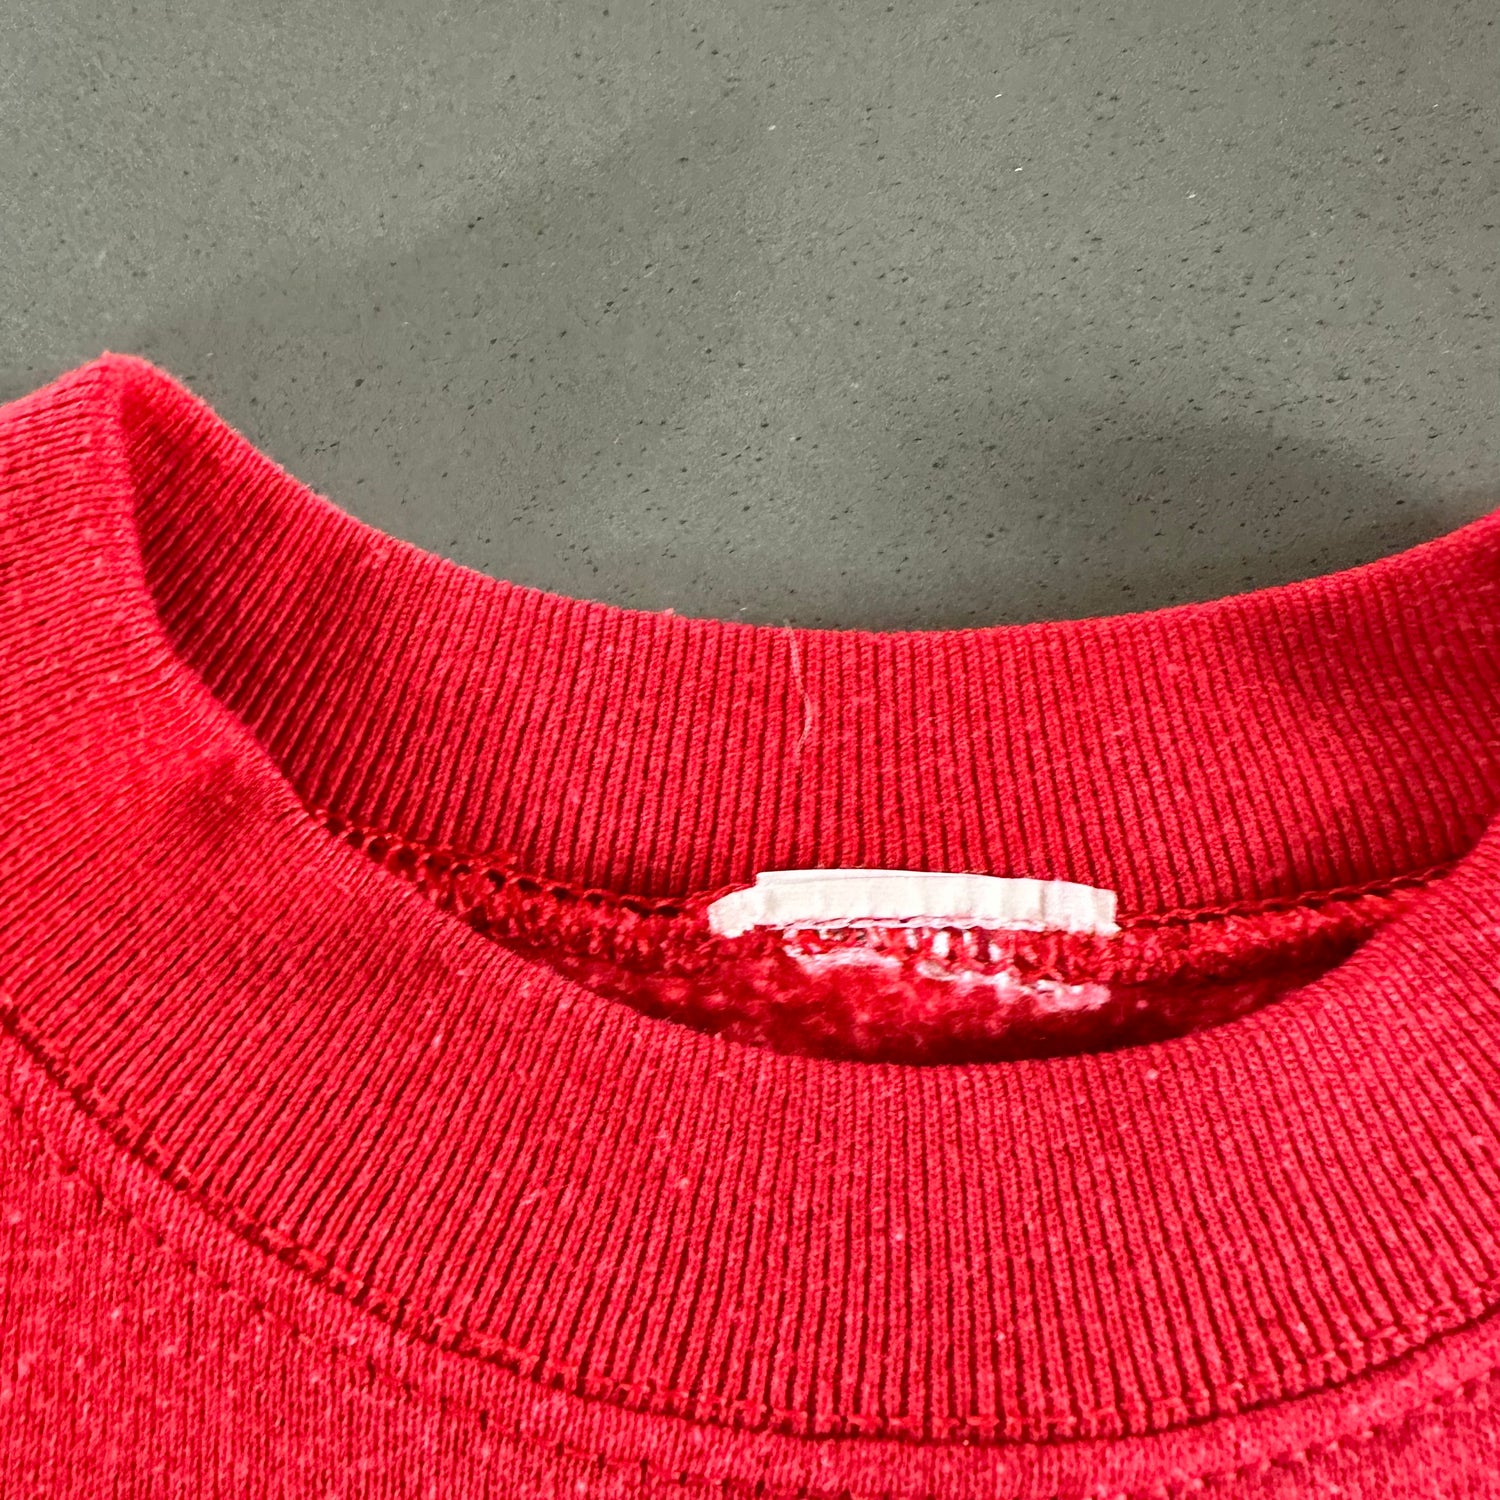 Vintage 1990s Jingle Bears Sweatshirt size XL